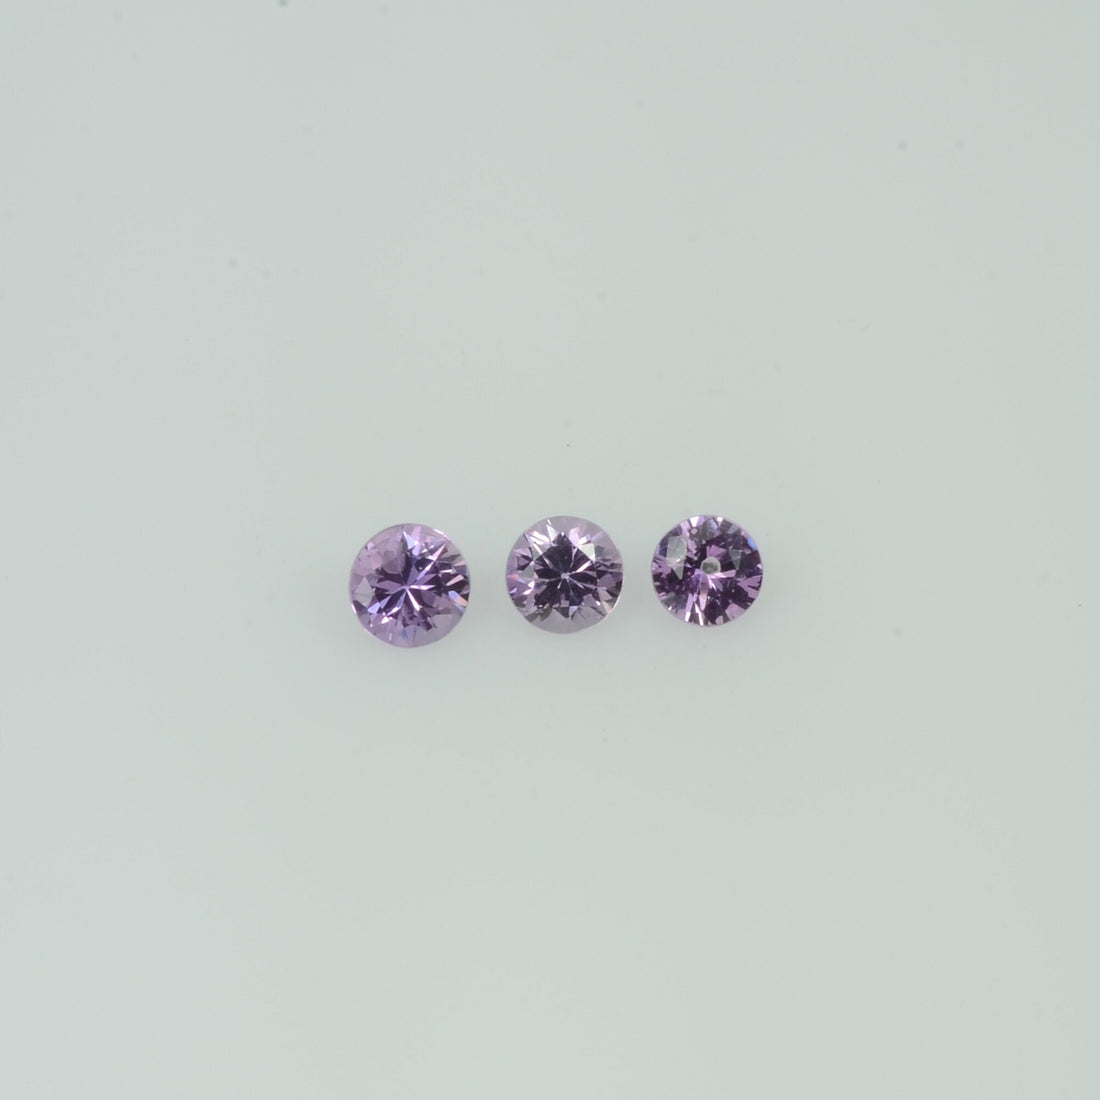 2-3.0 mm Natural Lavender Purple Sapphire Loose Gemstone Cleanish Quality Round Diamond Cut